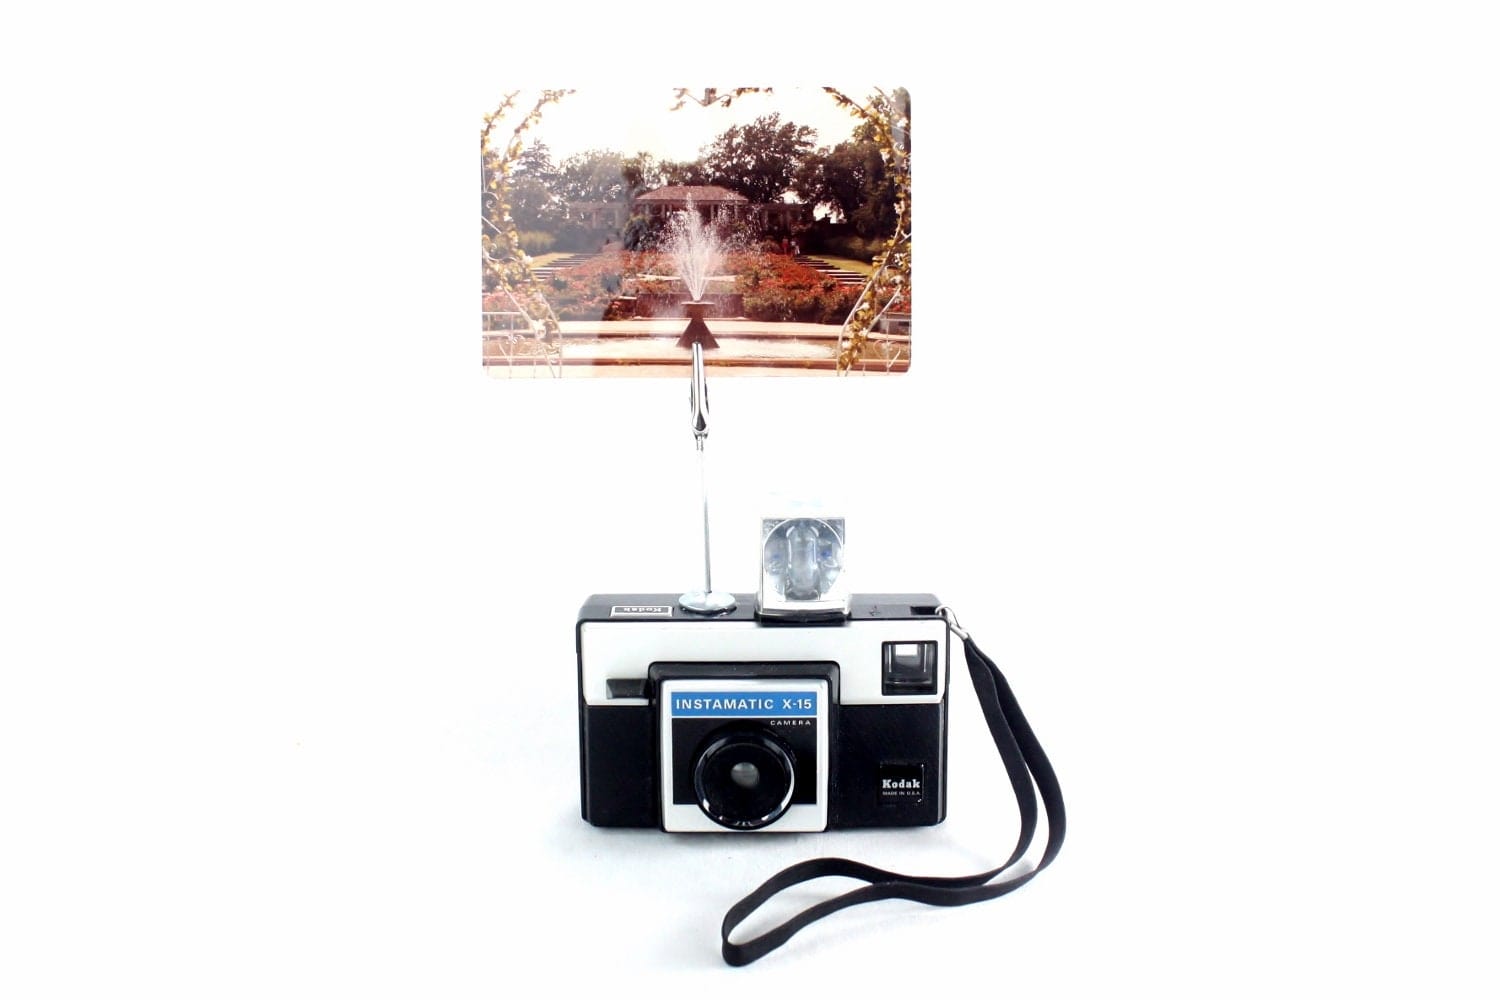 LightAndTimeArt Photo Holder Vintage Camera Photo Holder - Kodak Instamatic X-15 Camera - Wedding Name Card Holder, Photo Stand for Instax Film